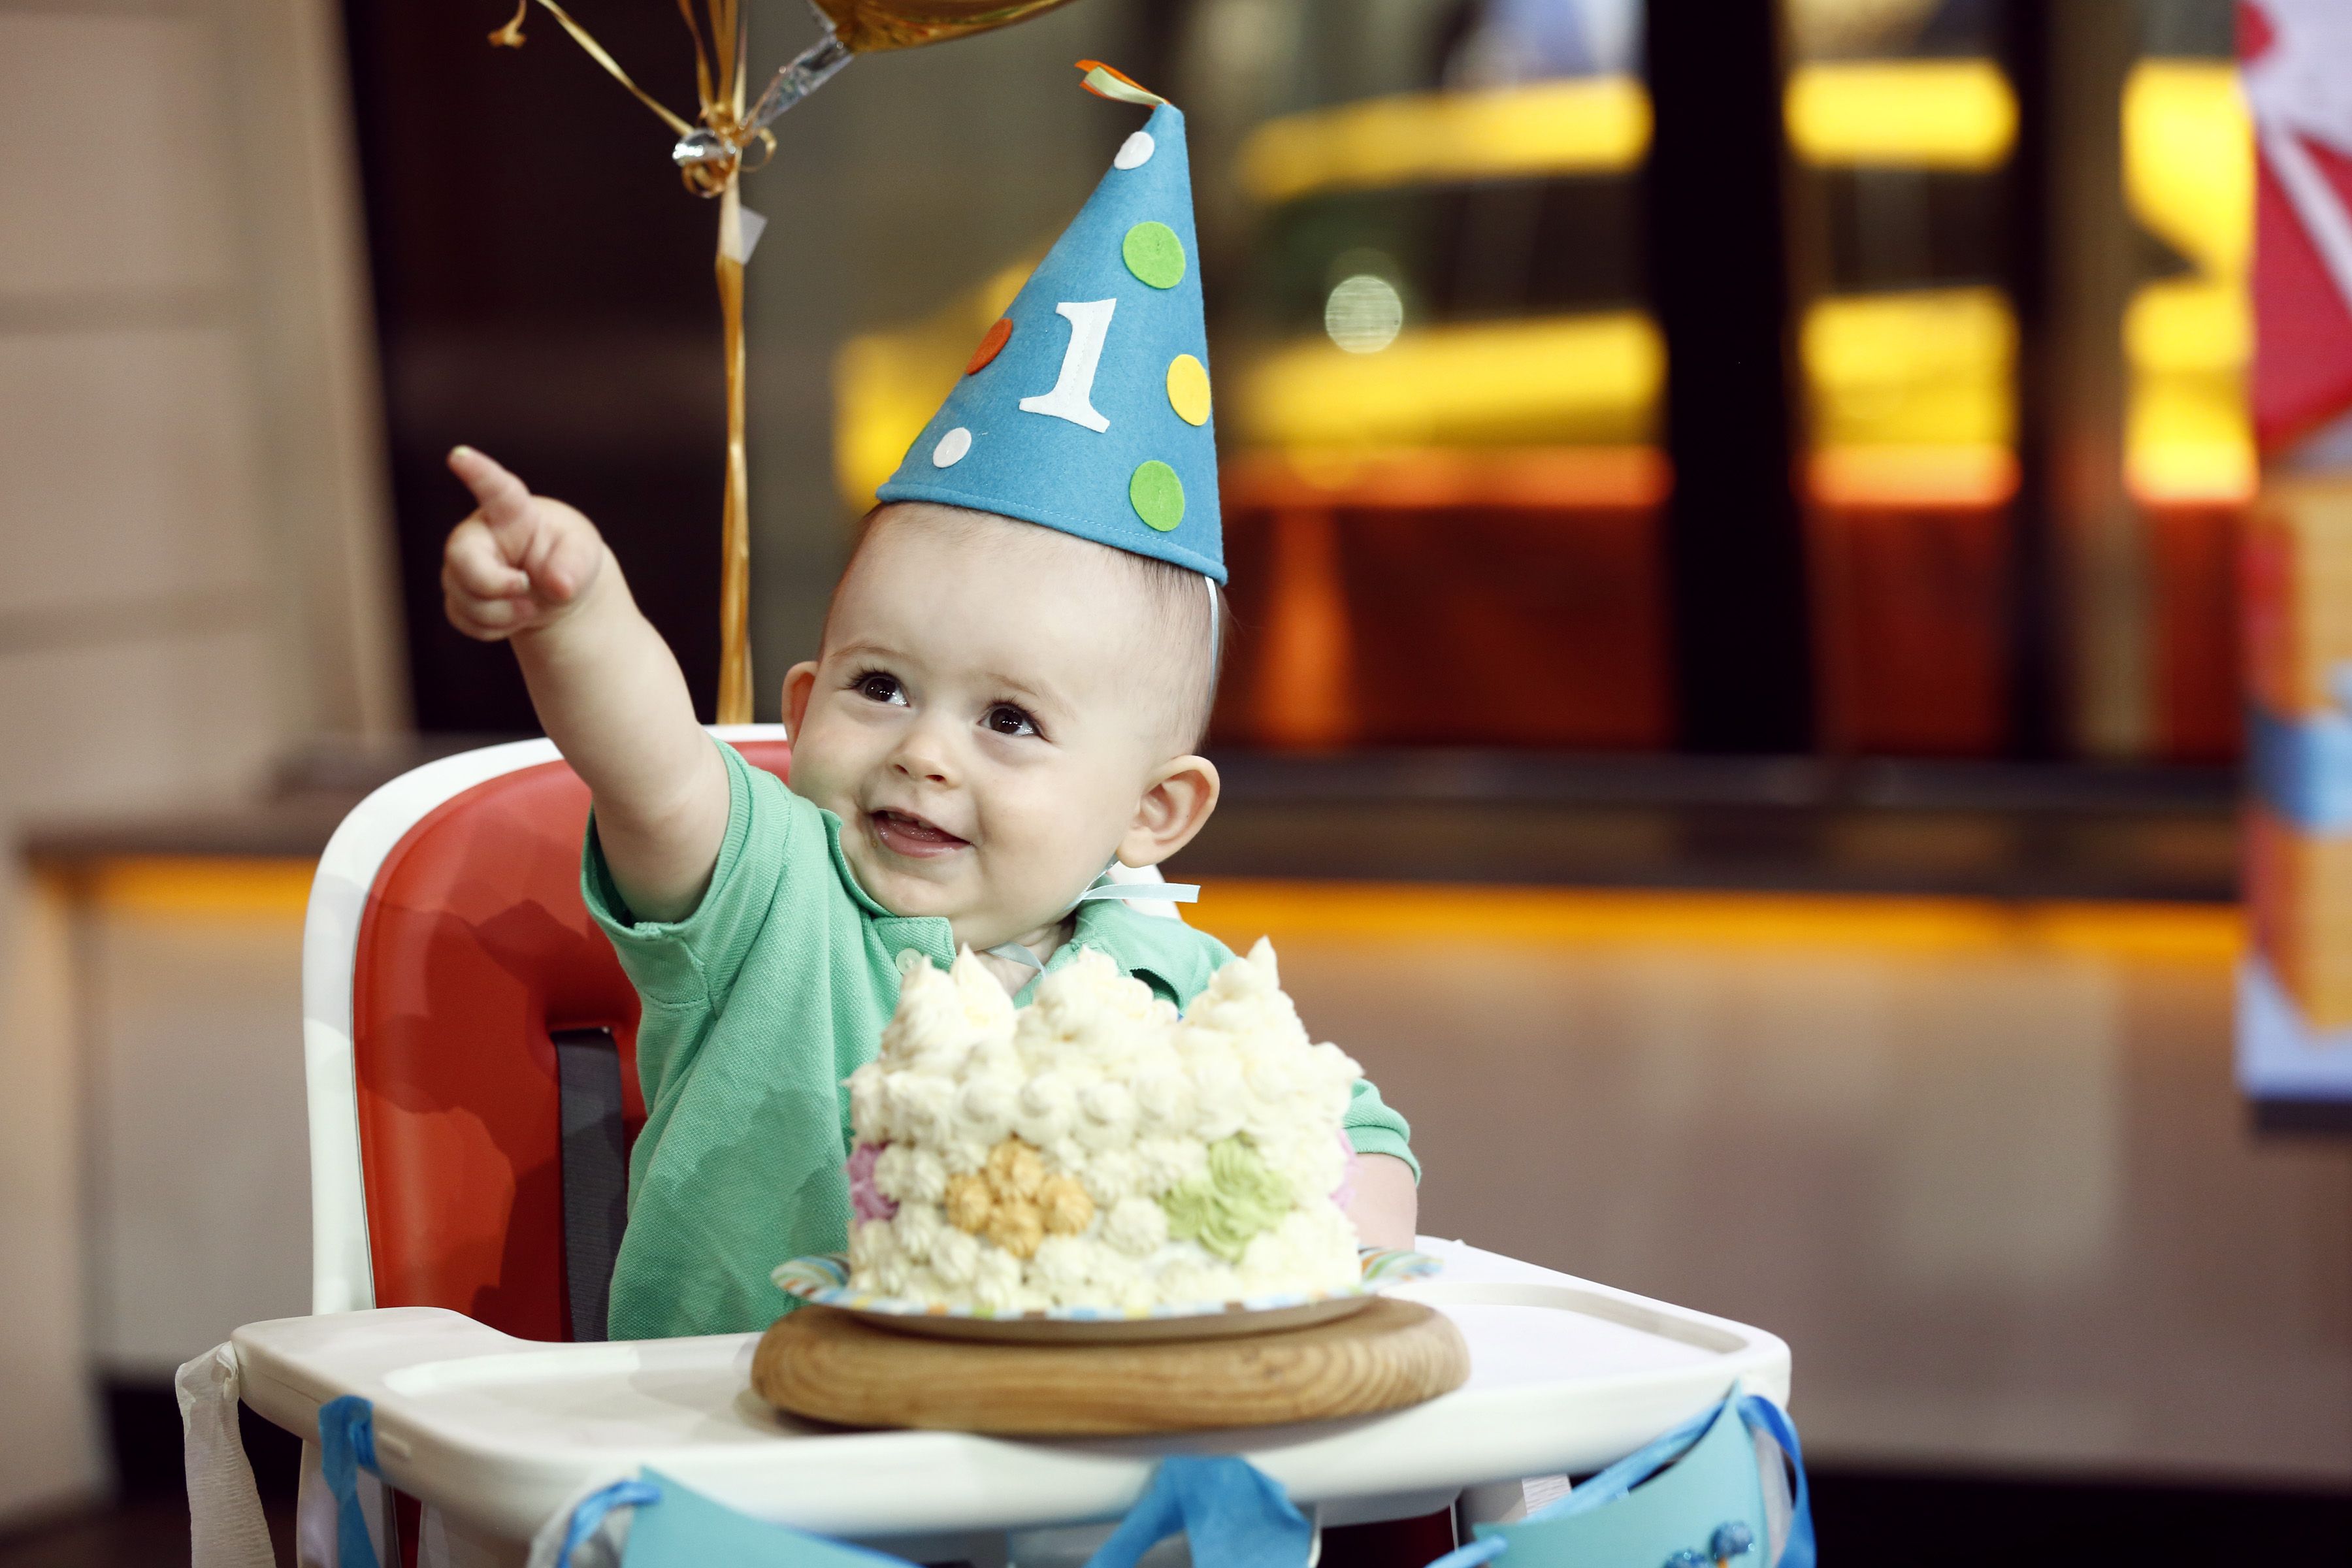 Simple Boy One Year Cake Smash | Orange County Newborn Photographer |  Anaheim Hills Baby Photographer | 714- 653- 2357